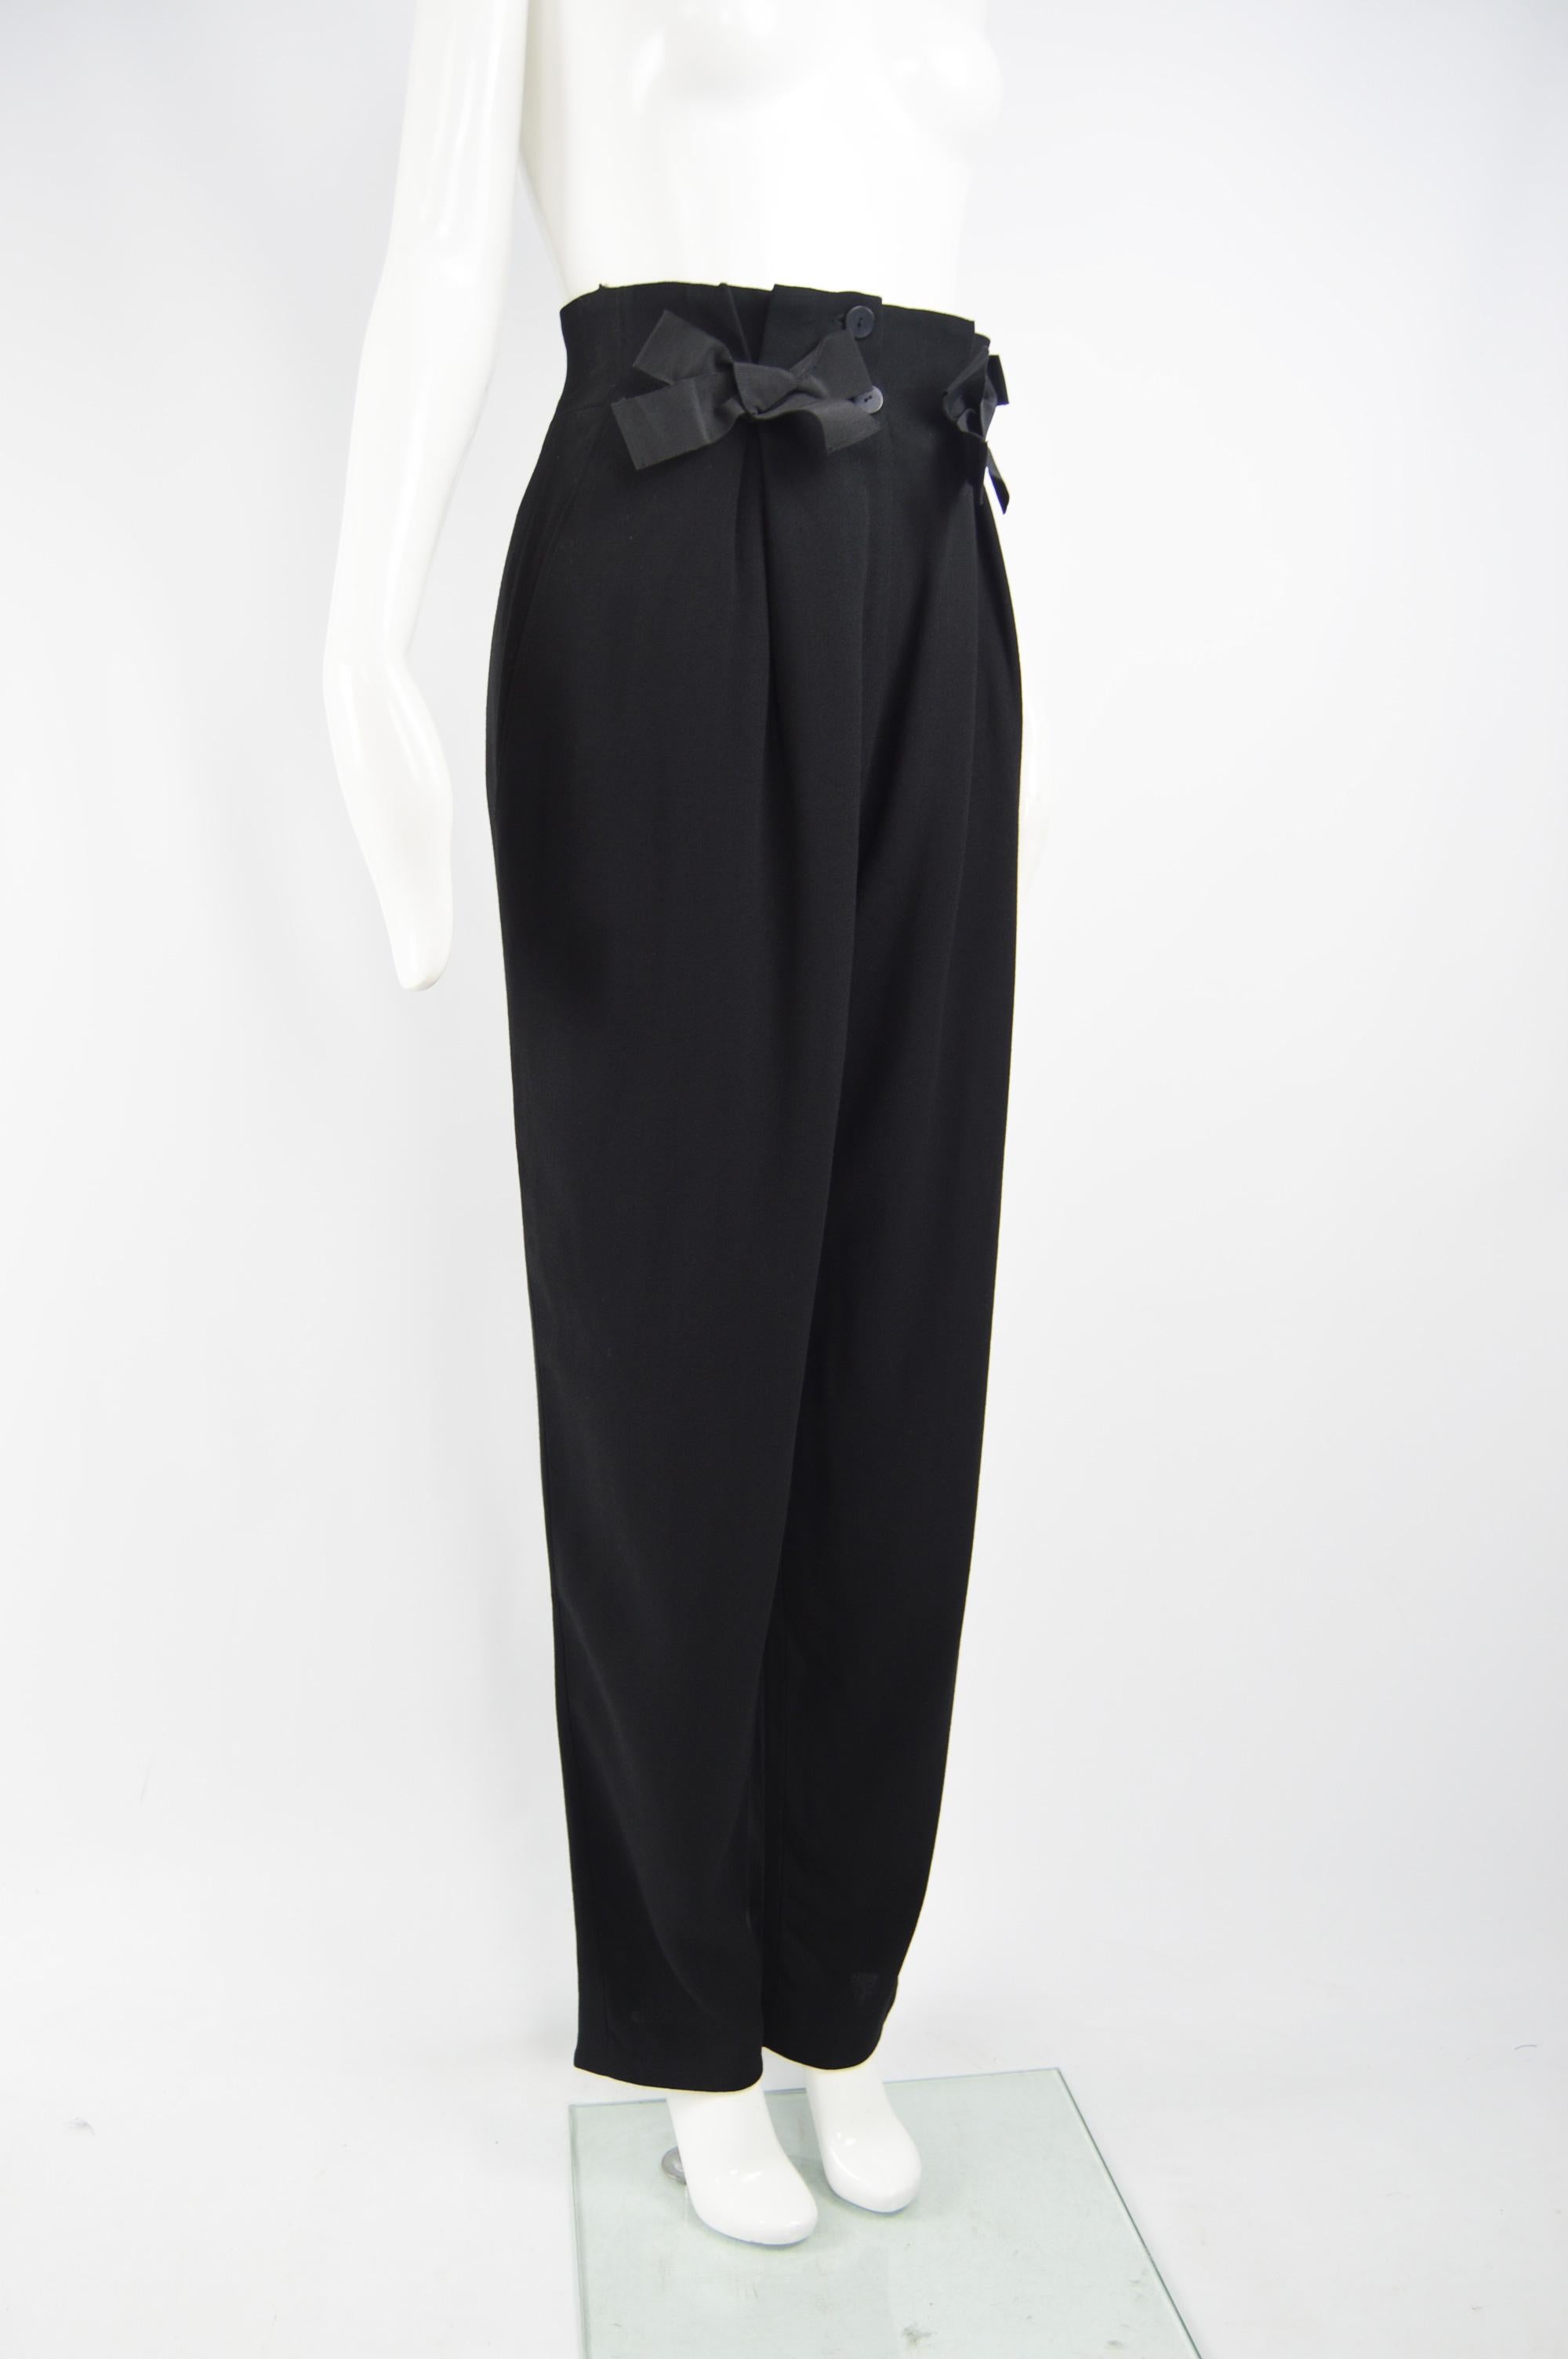 Nina Ricci Vintage High Waisted Black Crepe Pants 1